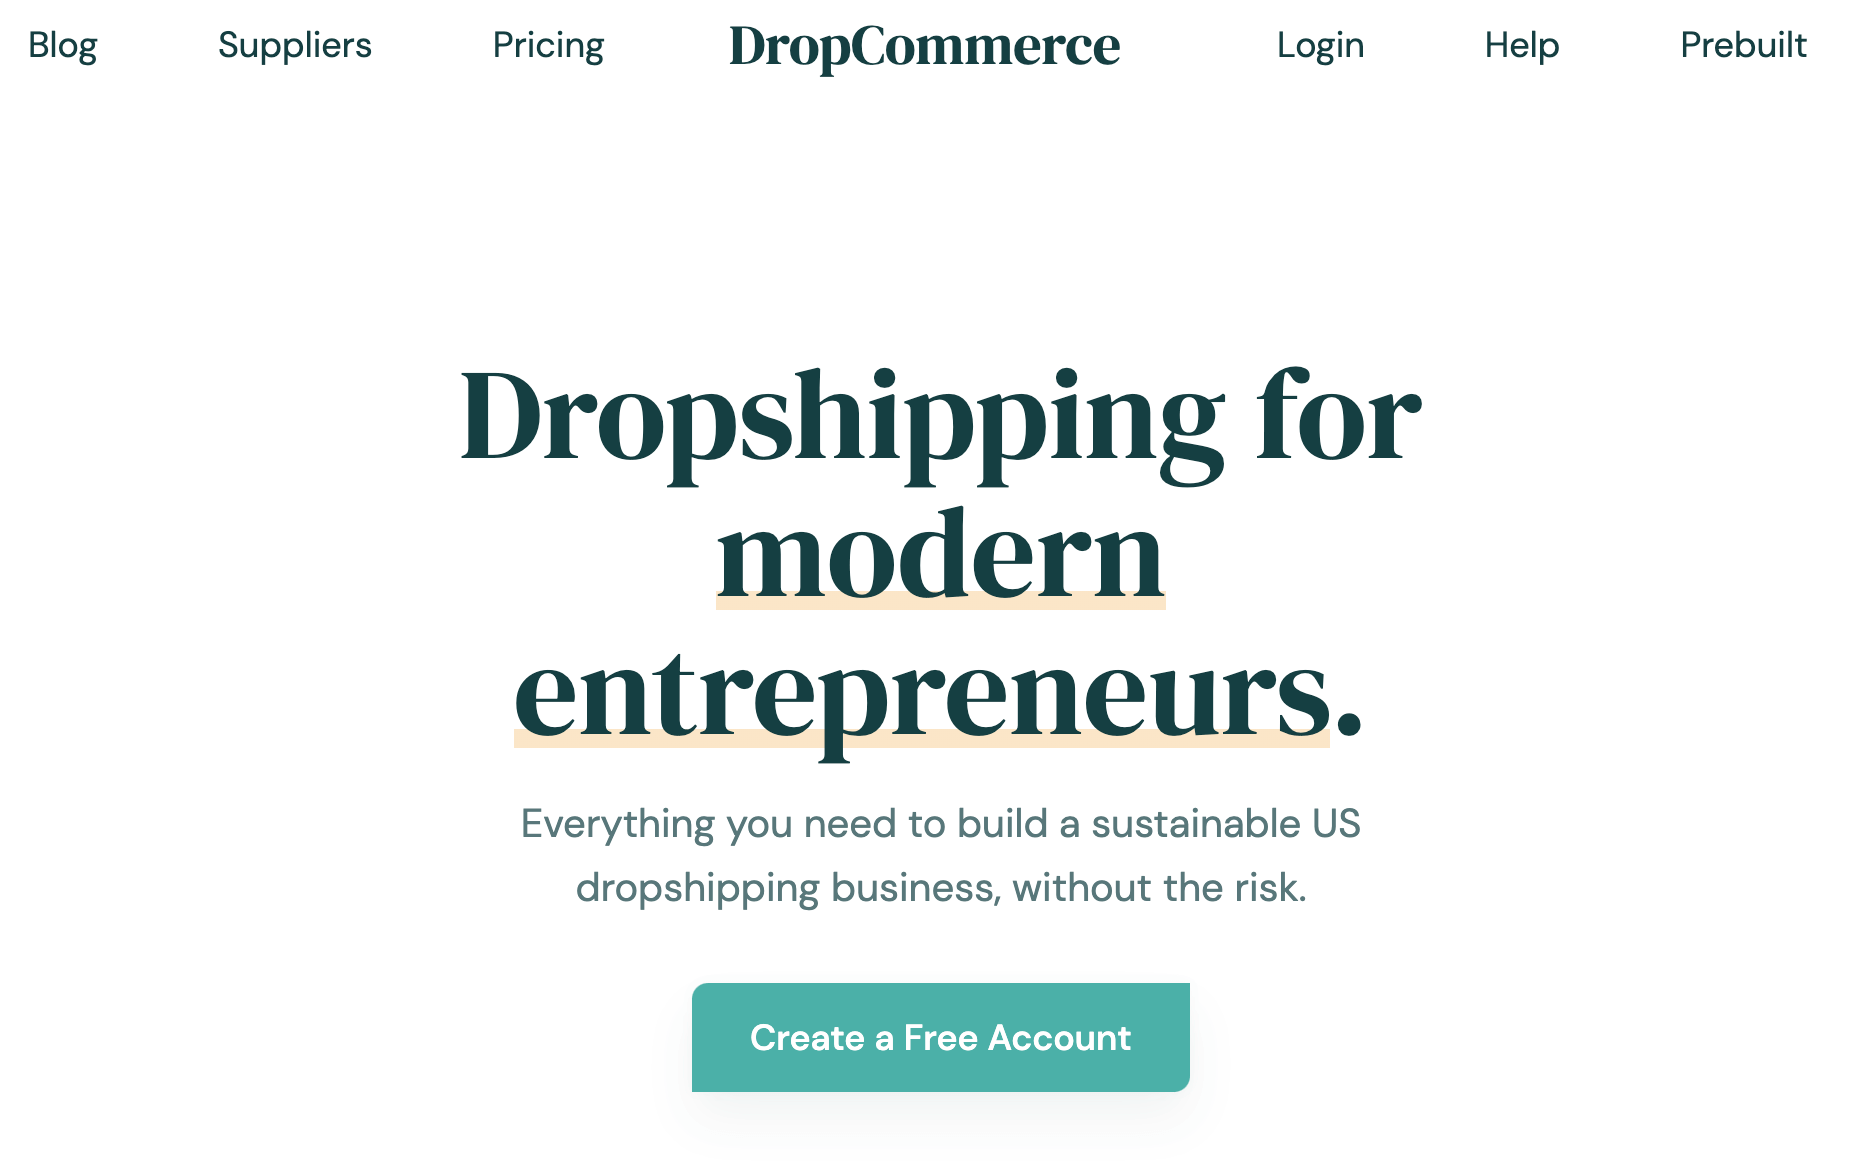 DropCommerce's homepage